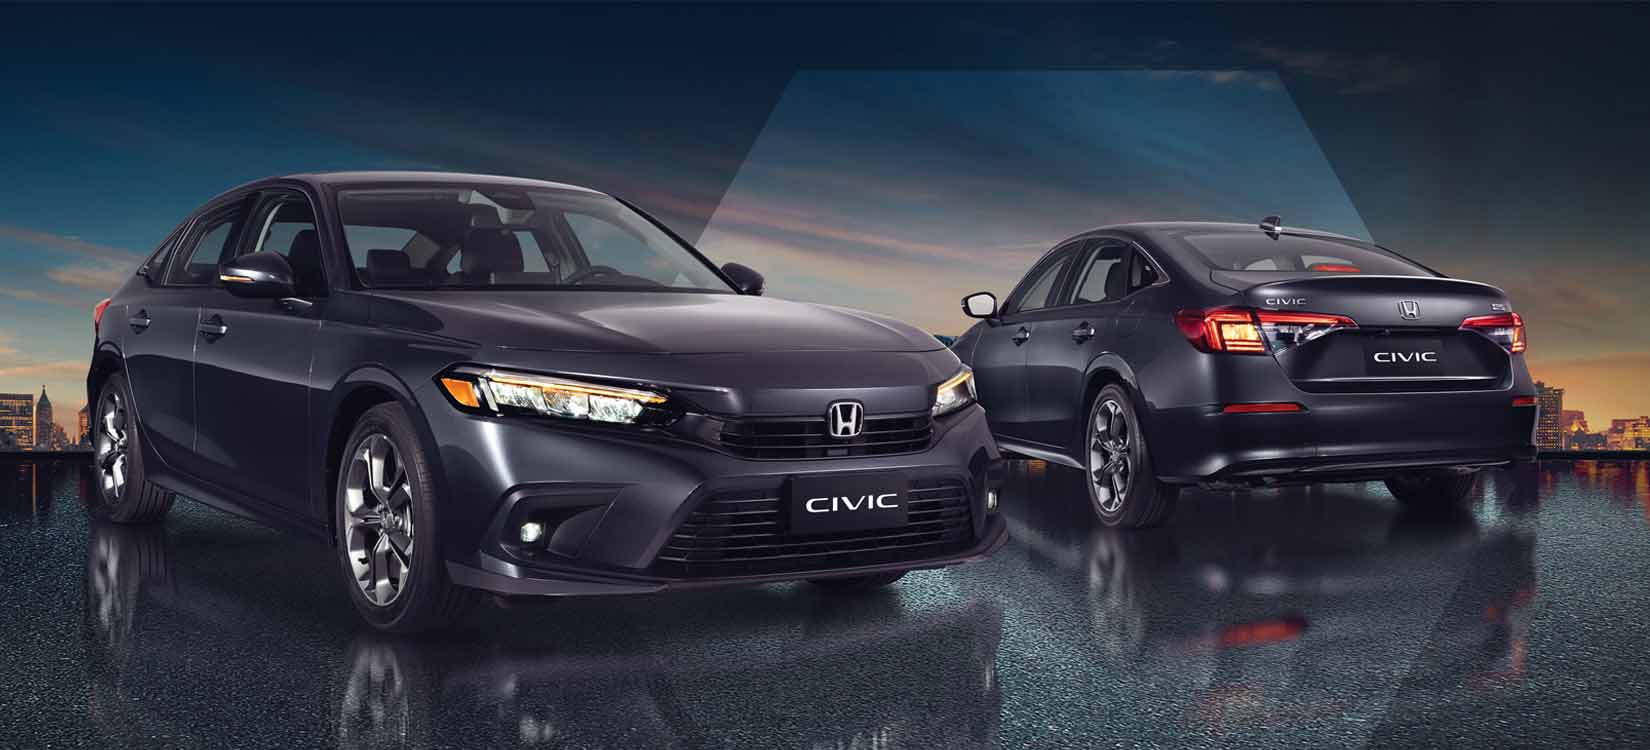 All-New Honda Civic V Turbo CVT Honda SENSING variant now available at Honda Cars dealerships